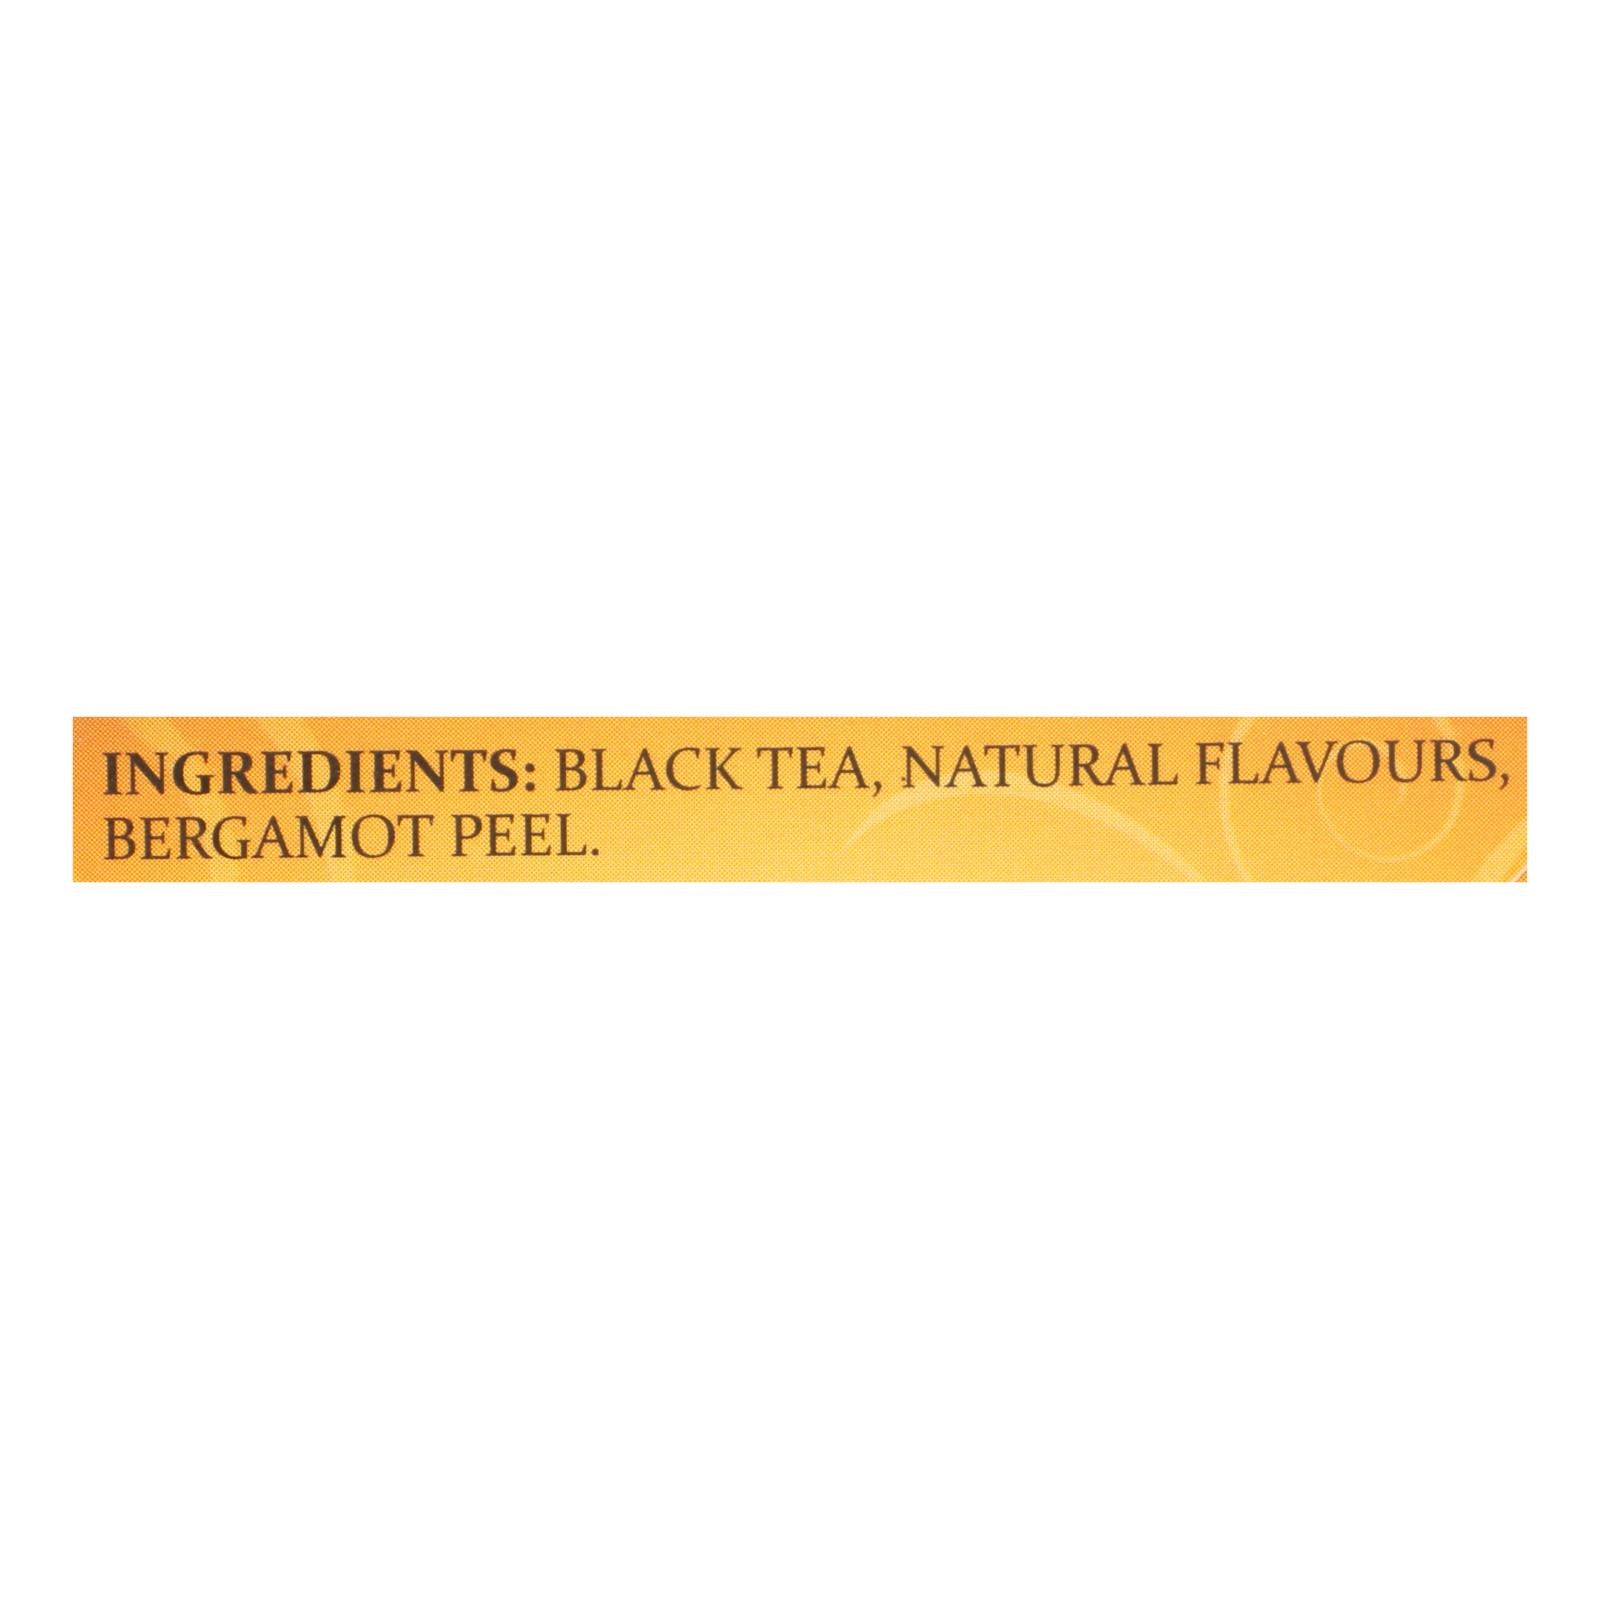 Twinings Tea Earl Grey Tea - Black Tea - Case Of 6 - 20 Bags